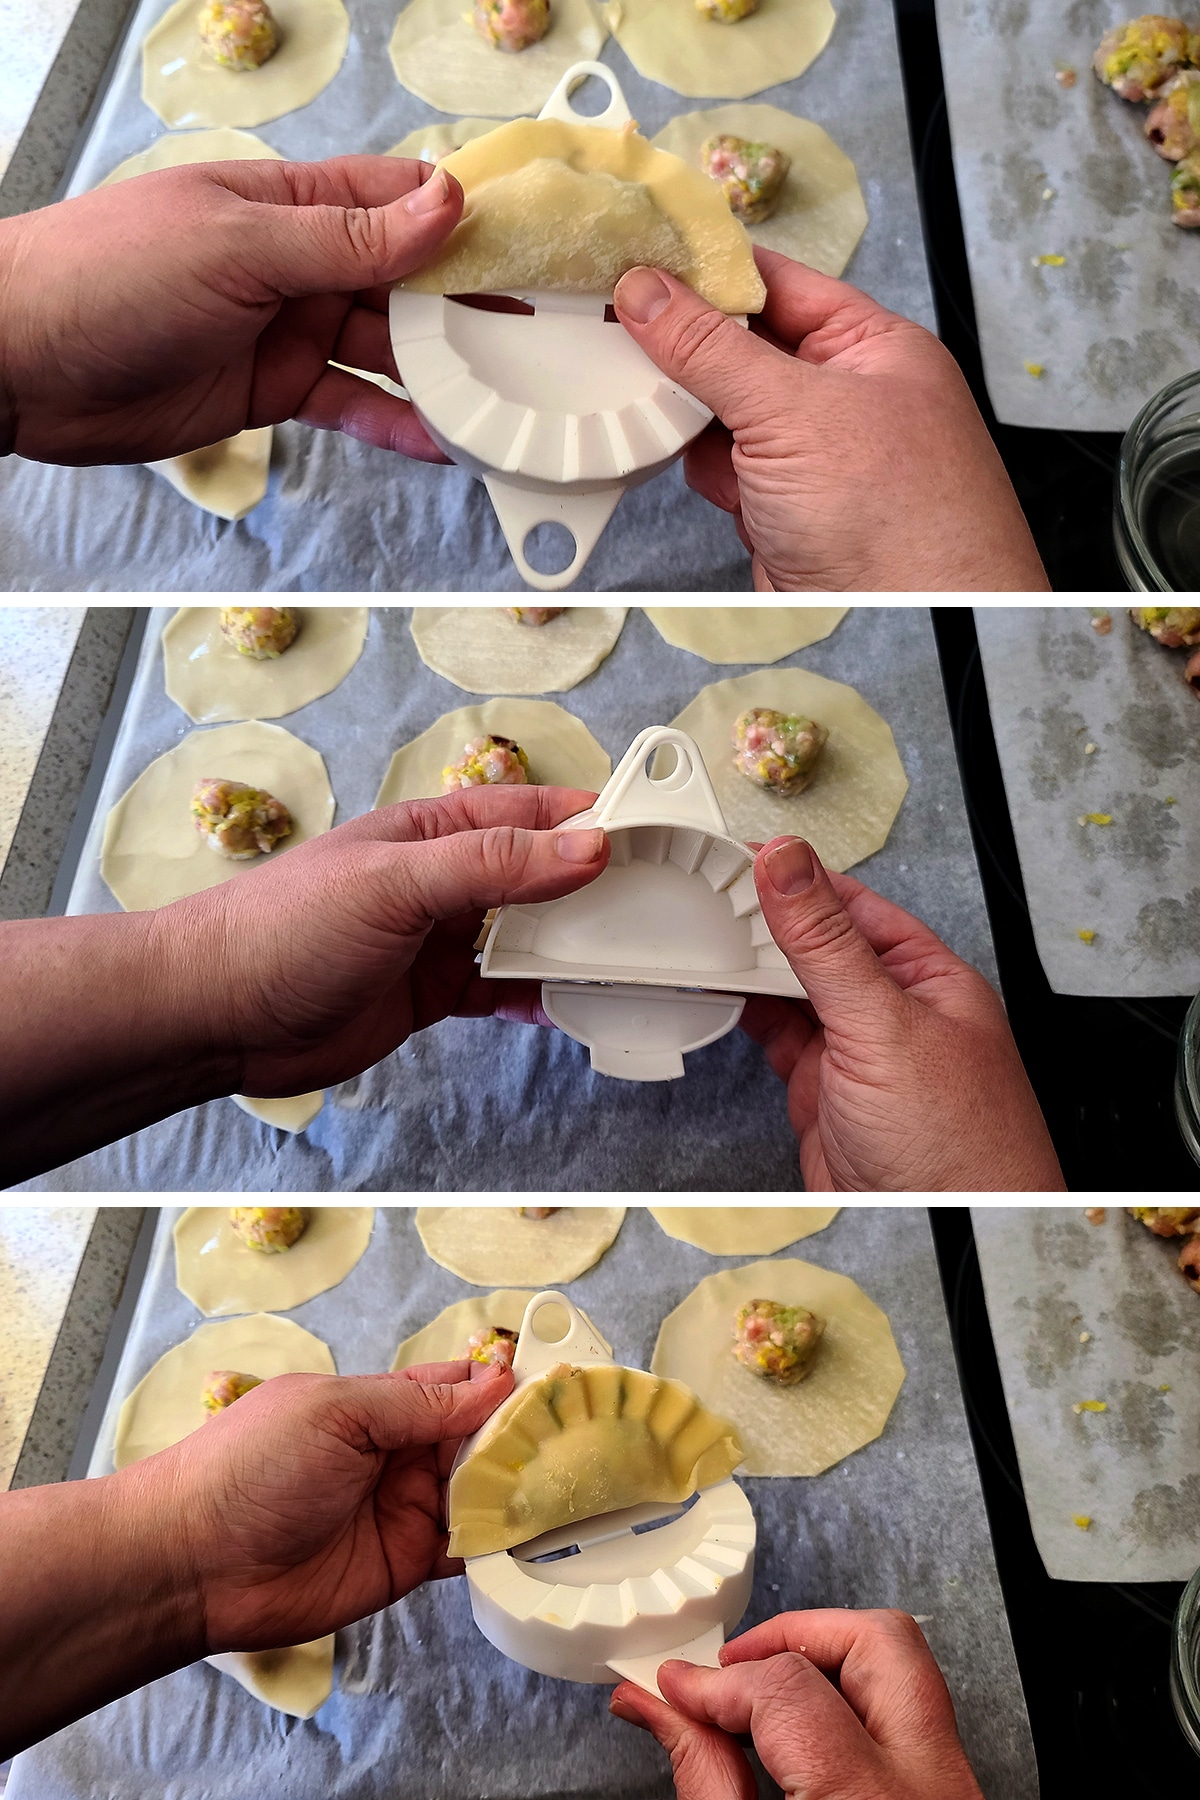 A 3 part image showing a dumpling press forming a gyoza.